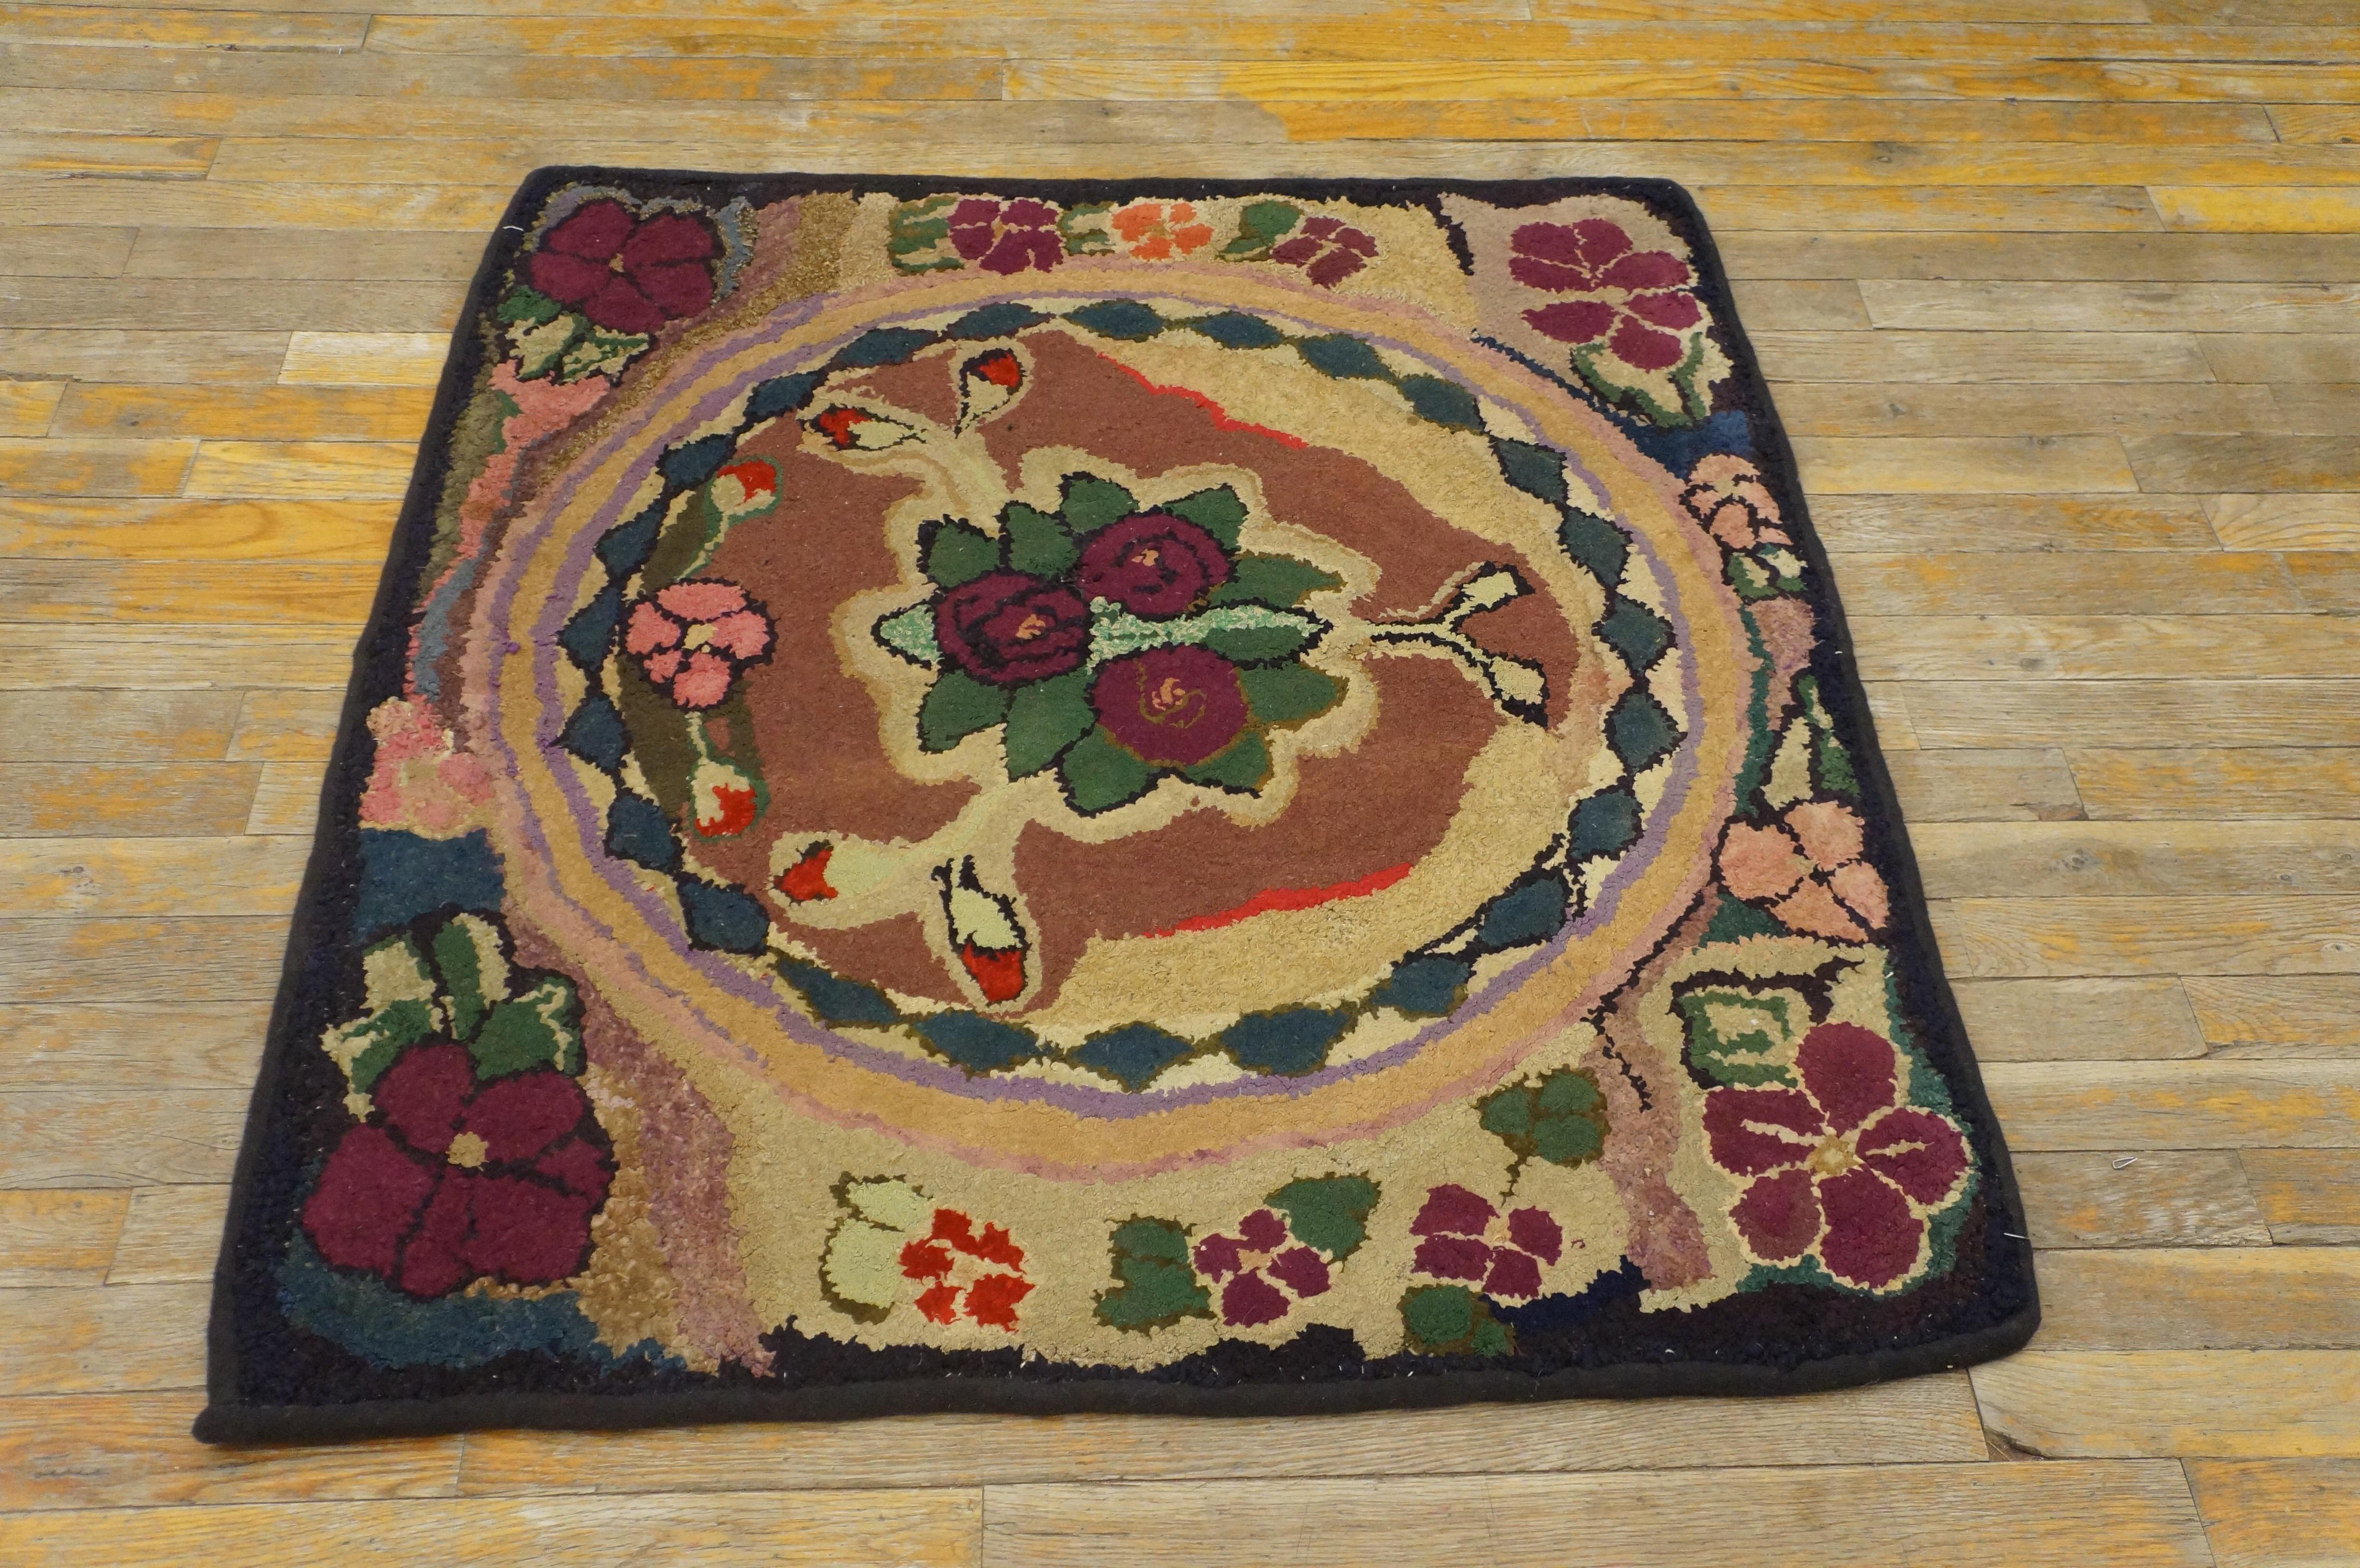 Antique American hooked rug. Measures: 2'11